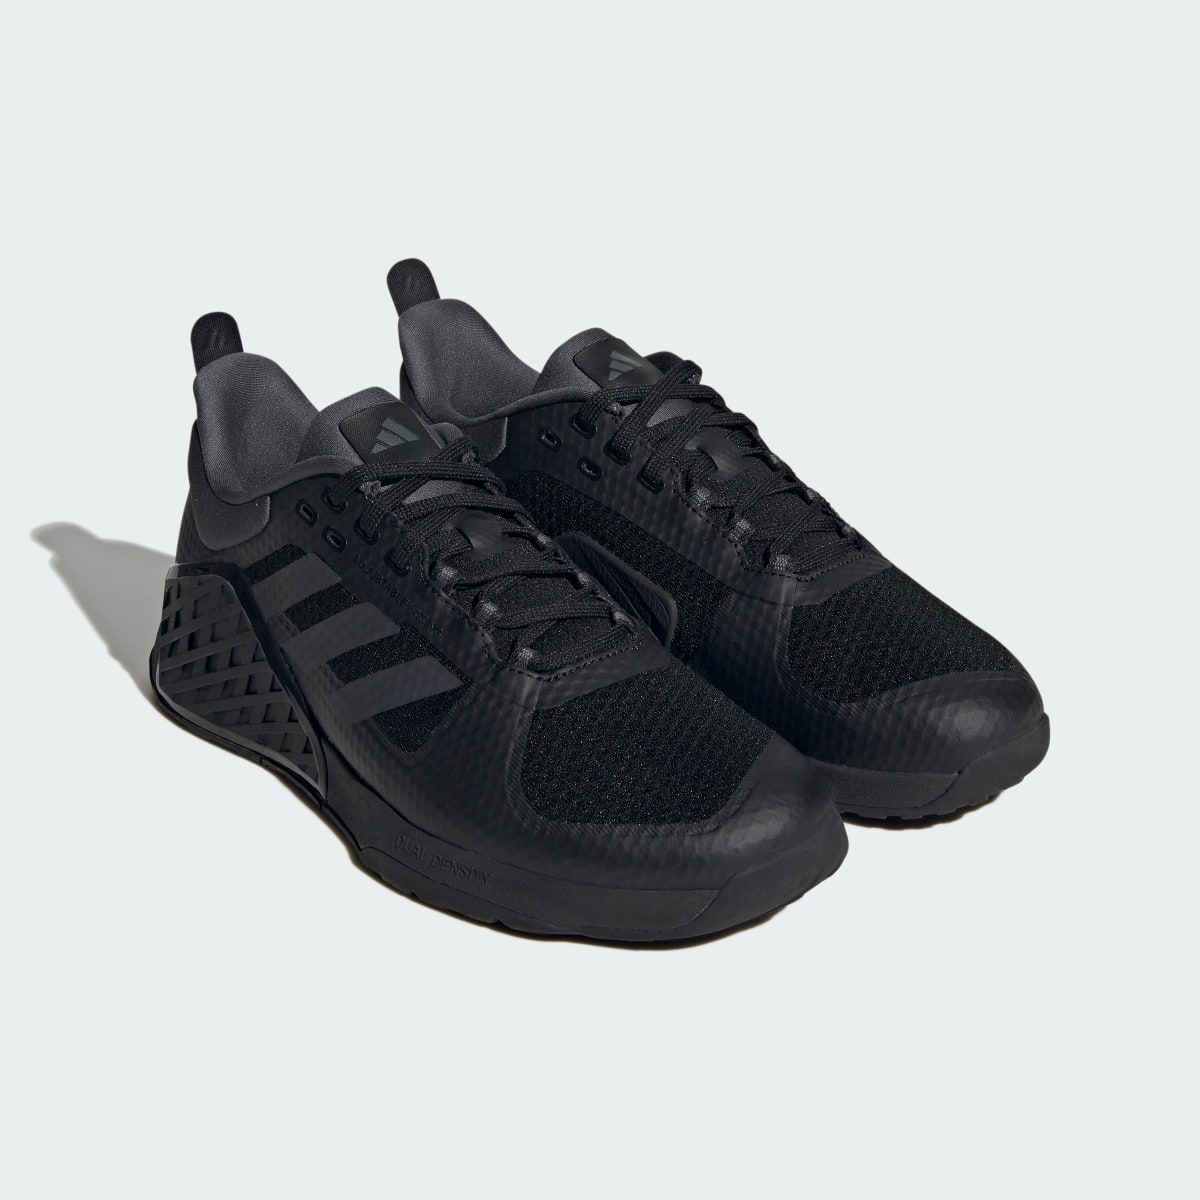 Adidas Dropset 2 Training Shoes. 11